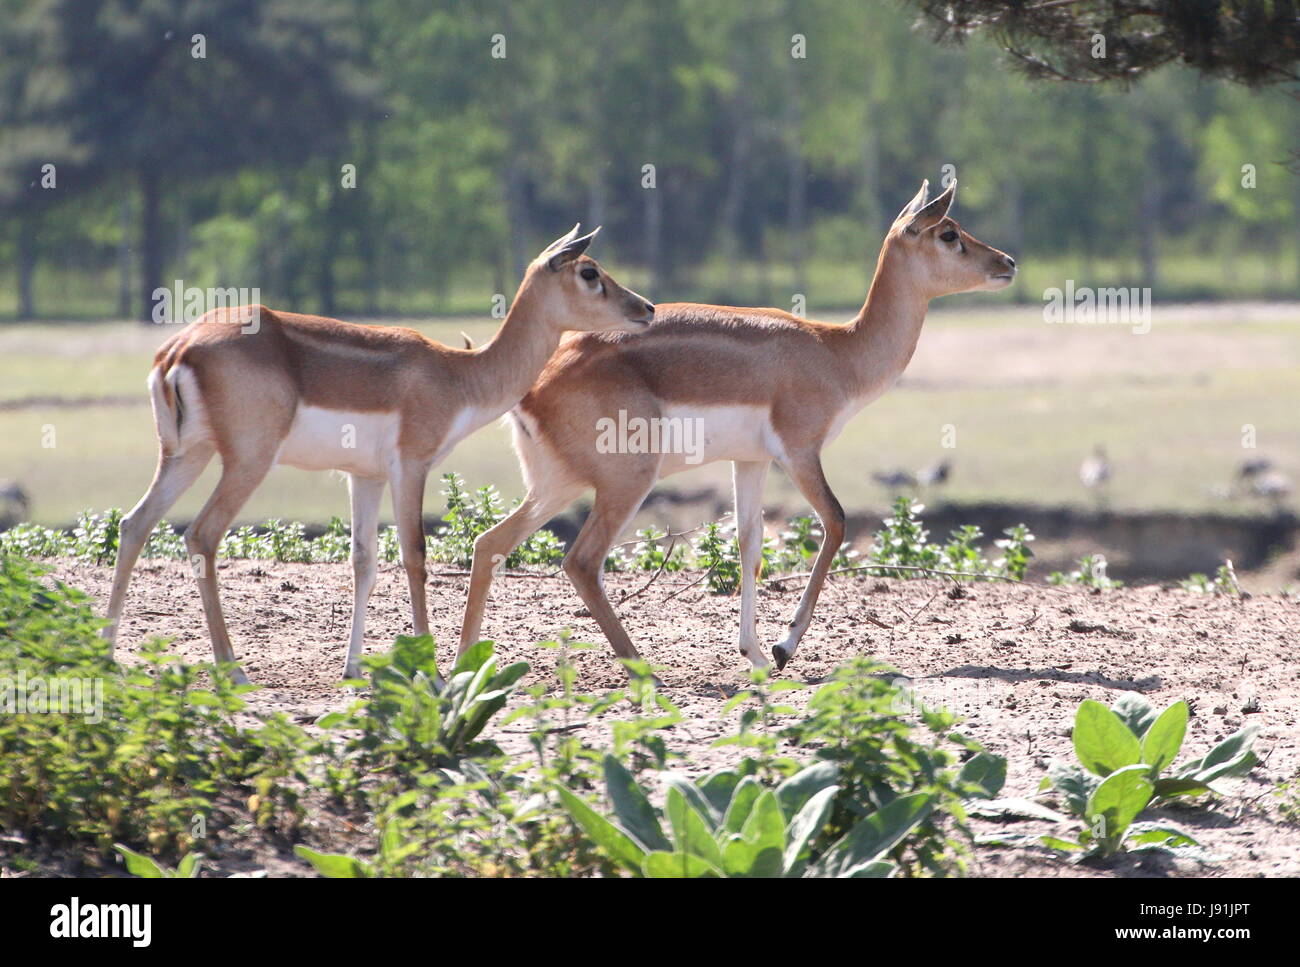 Female Indian Blackbuck antelopes (Antilope cervicapra). Stock Photo